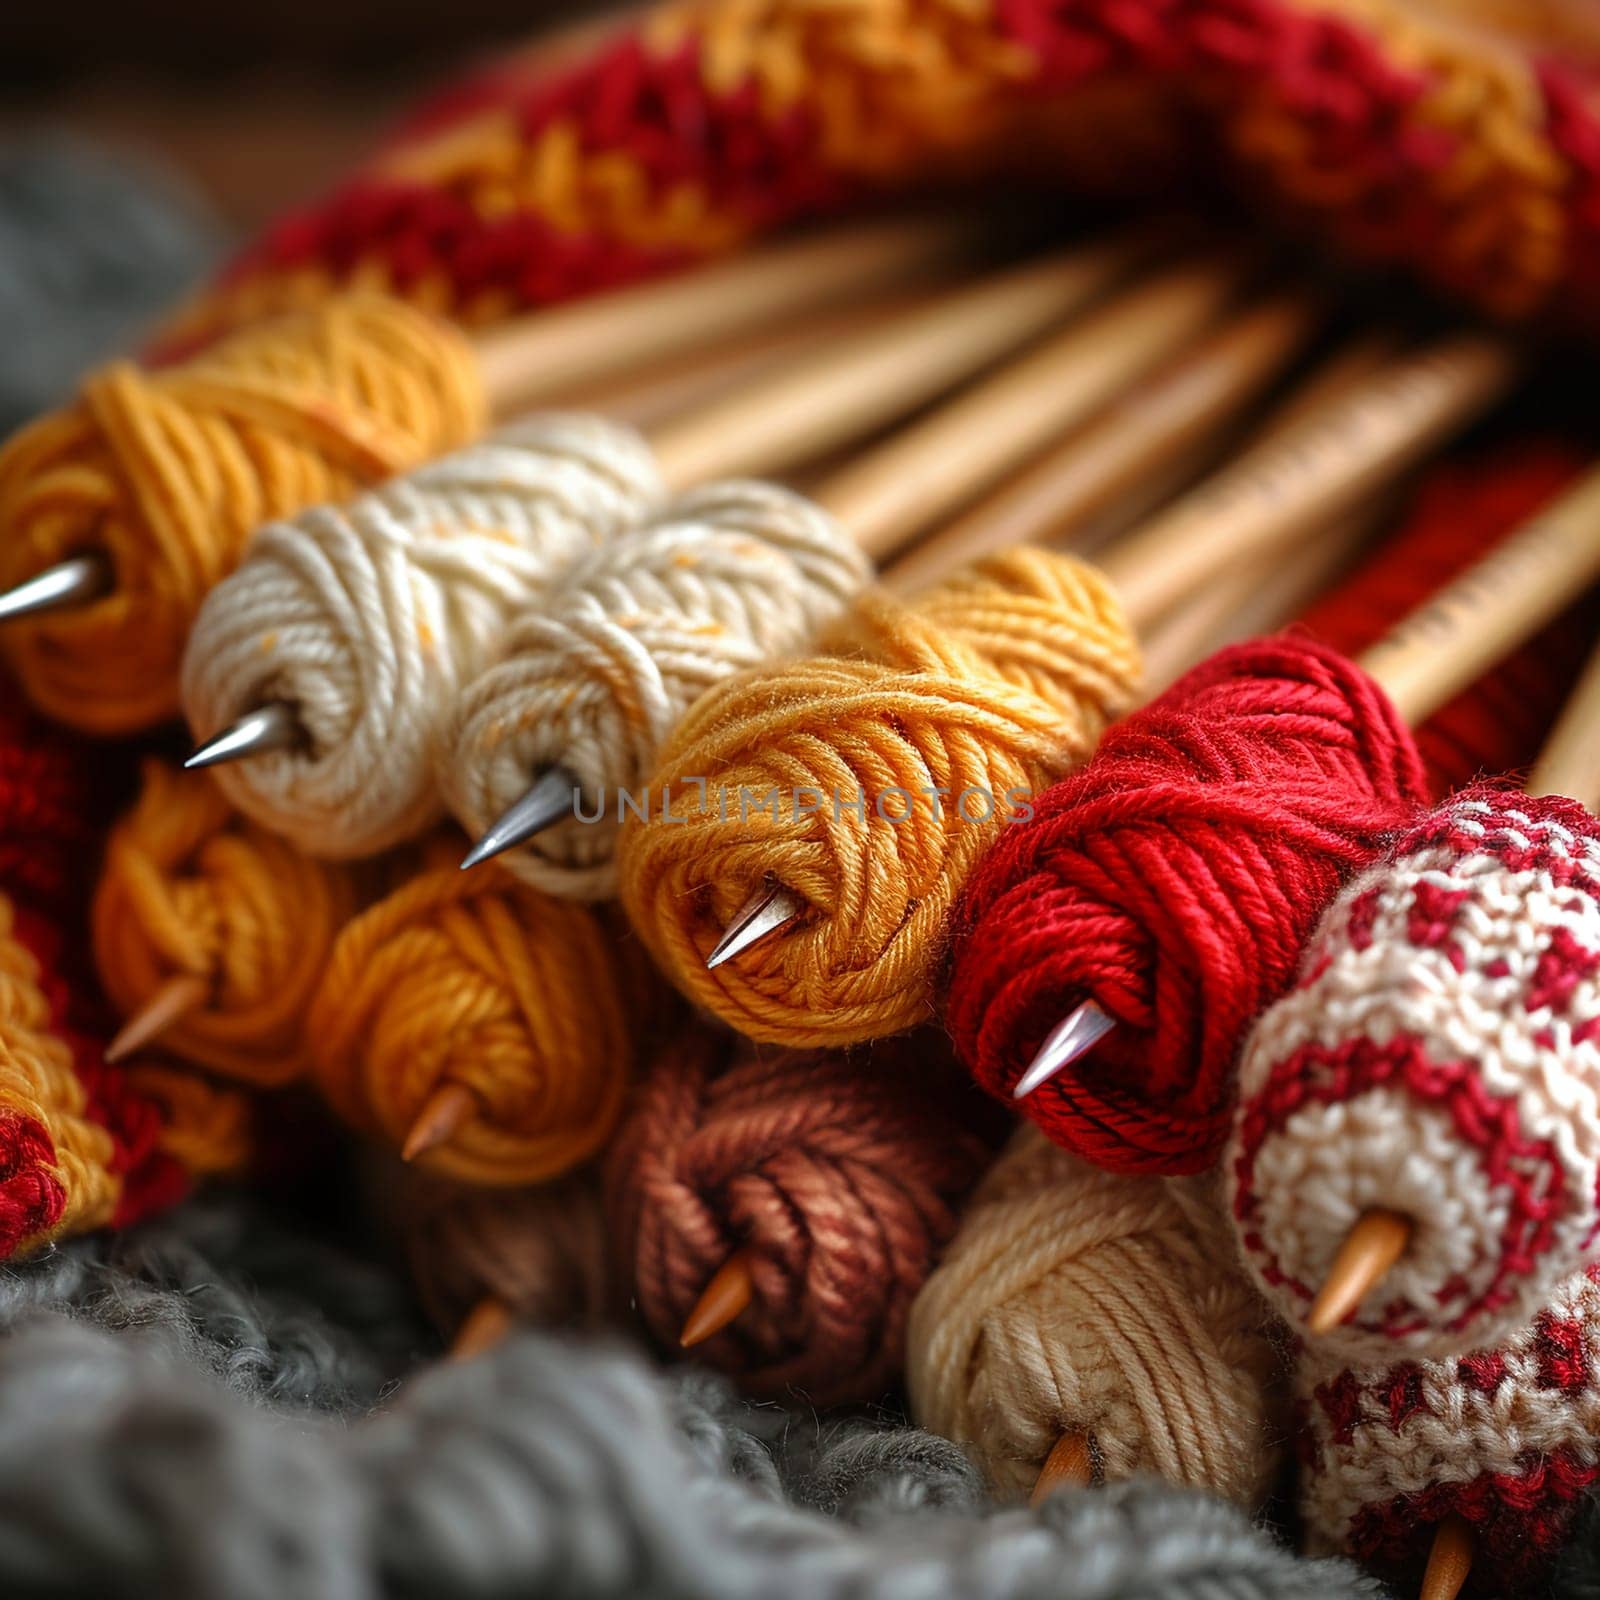 Close-up of knitting needles and wool, symbolizing creativity and craftsmanship.